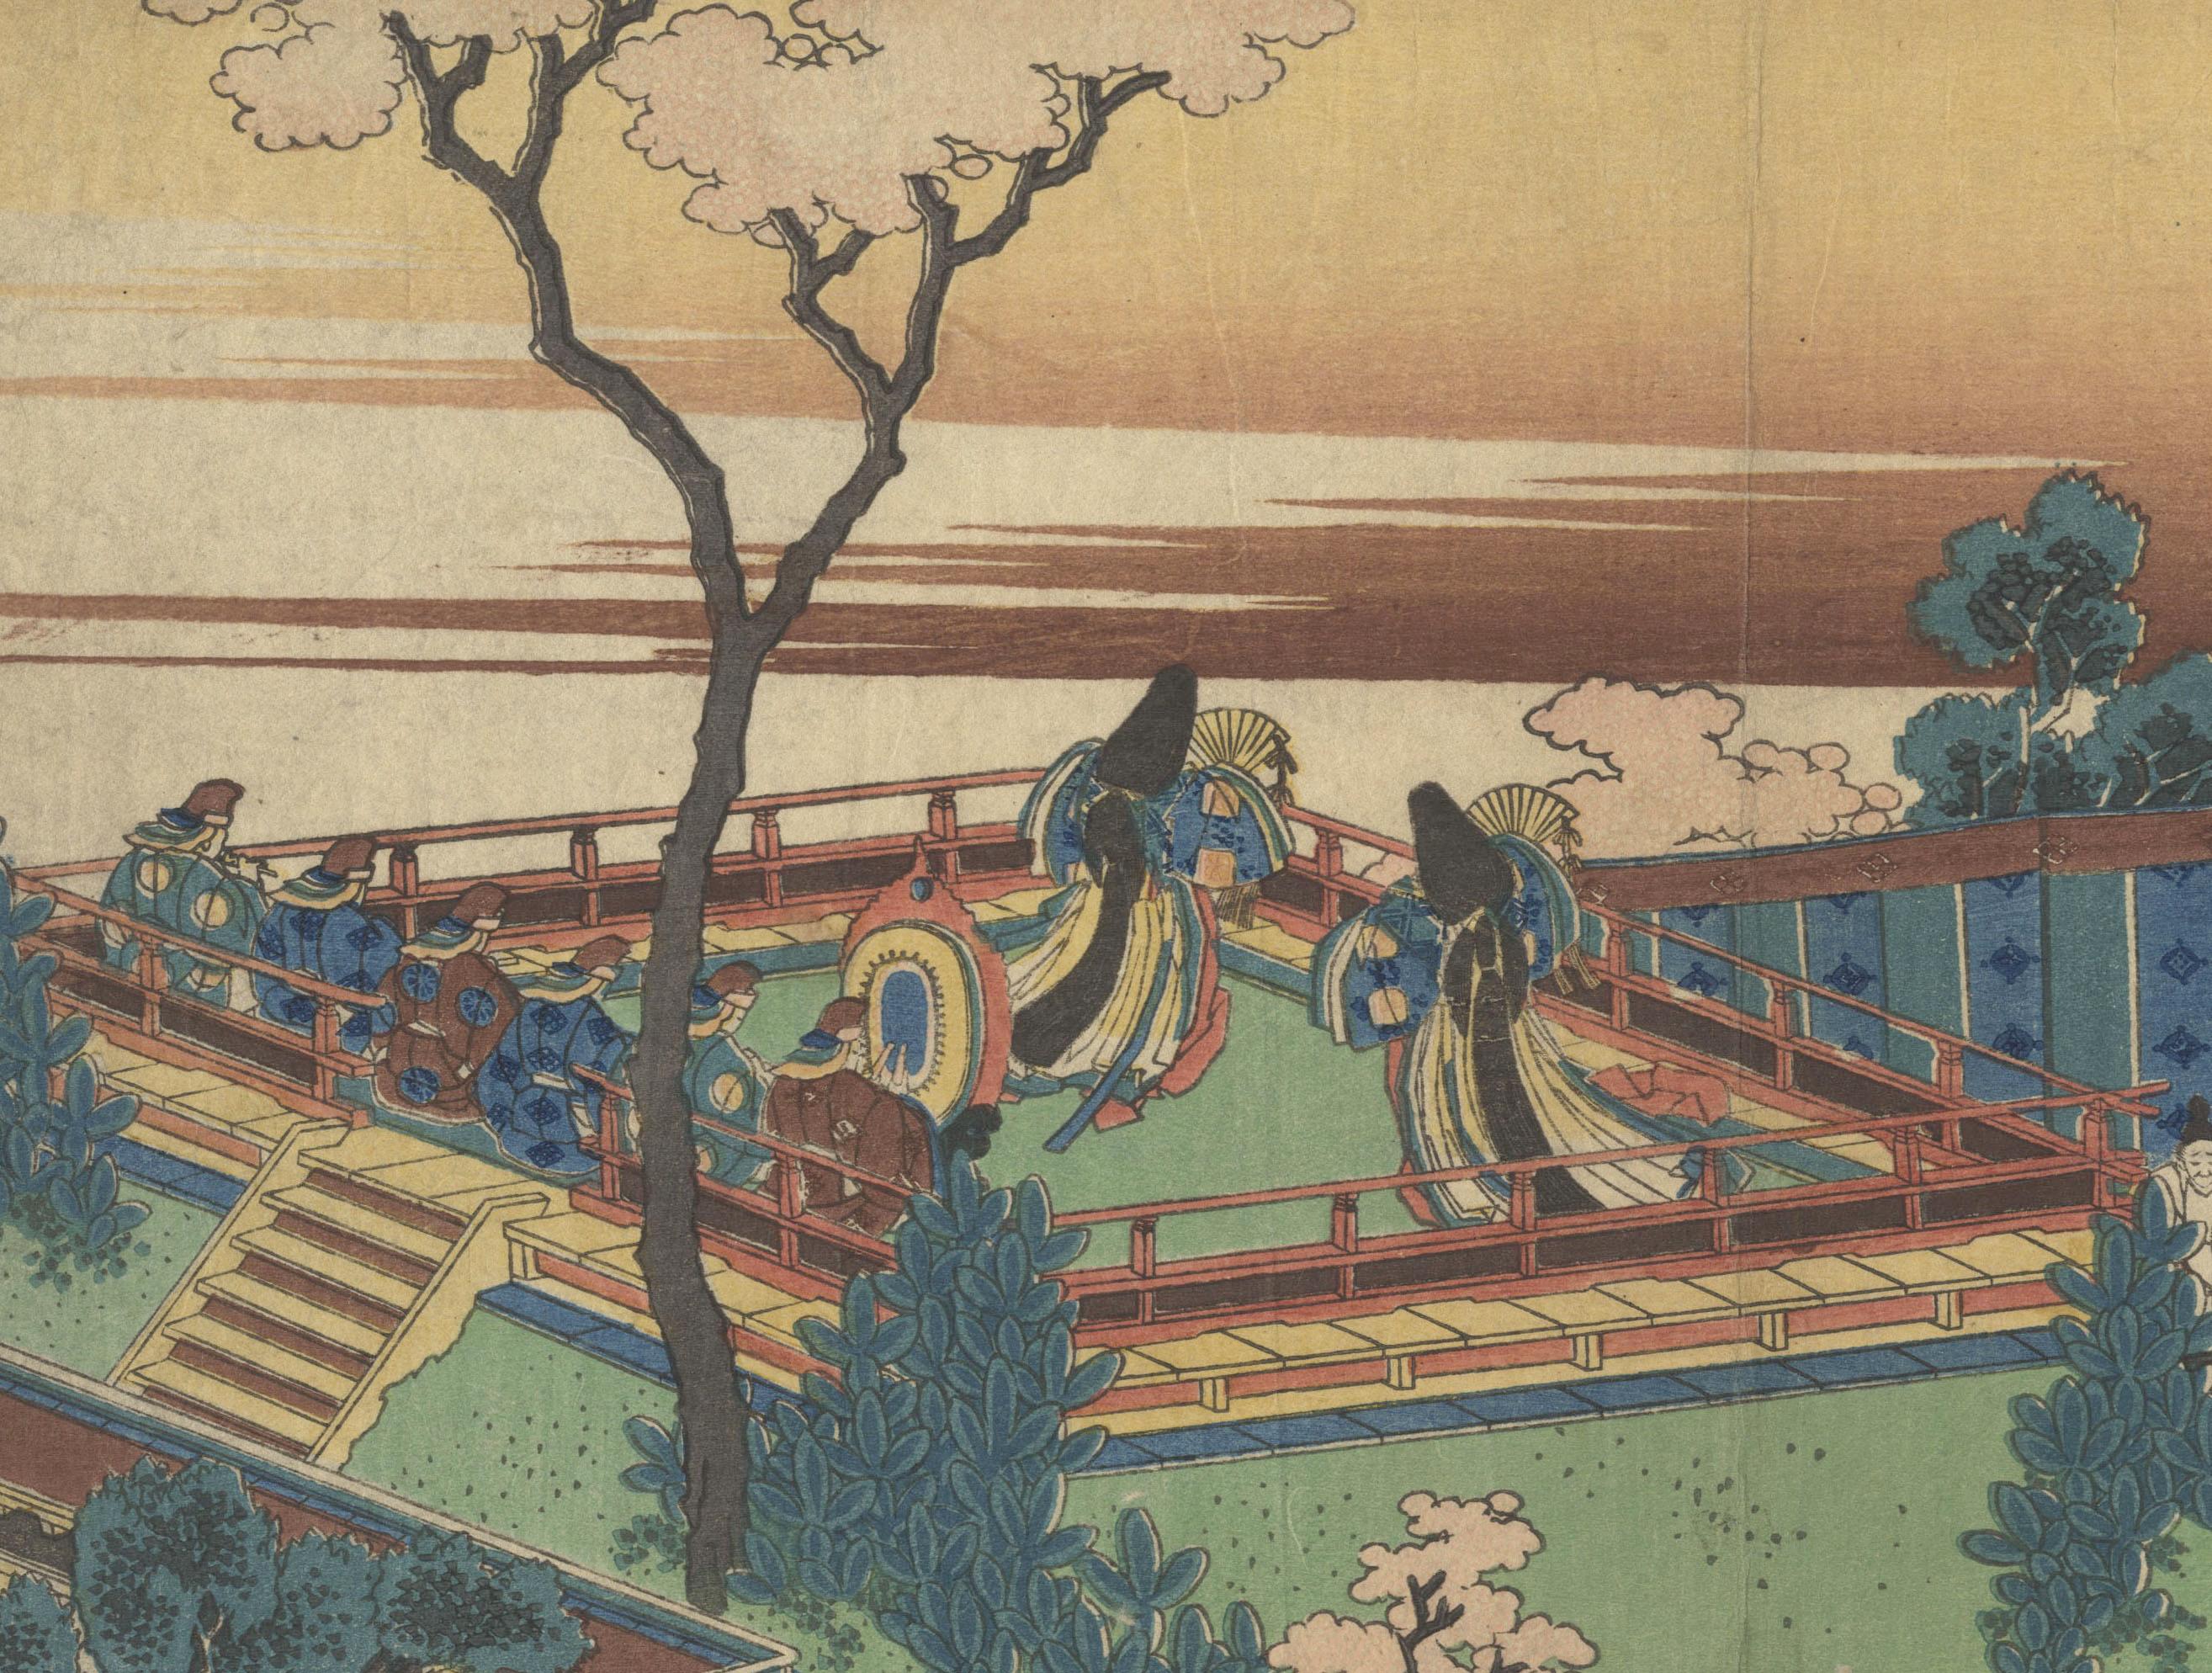 Edo Katsushika Hokusai, Ukiyo-e Japanese Woodblock Print, 19th Century, 100 Poems For Sale